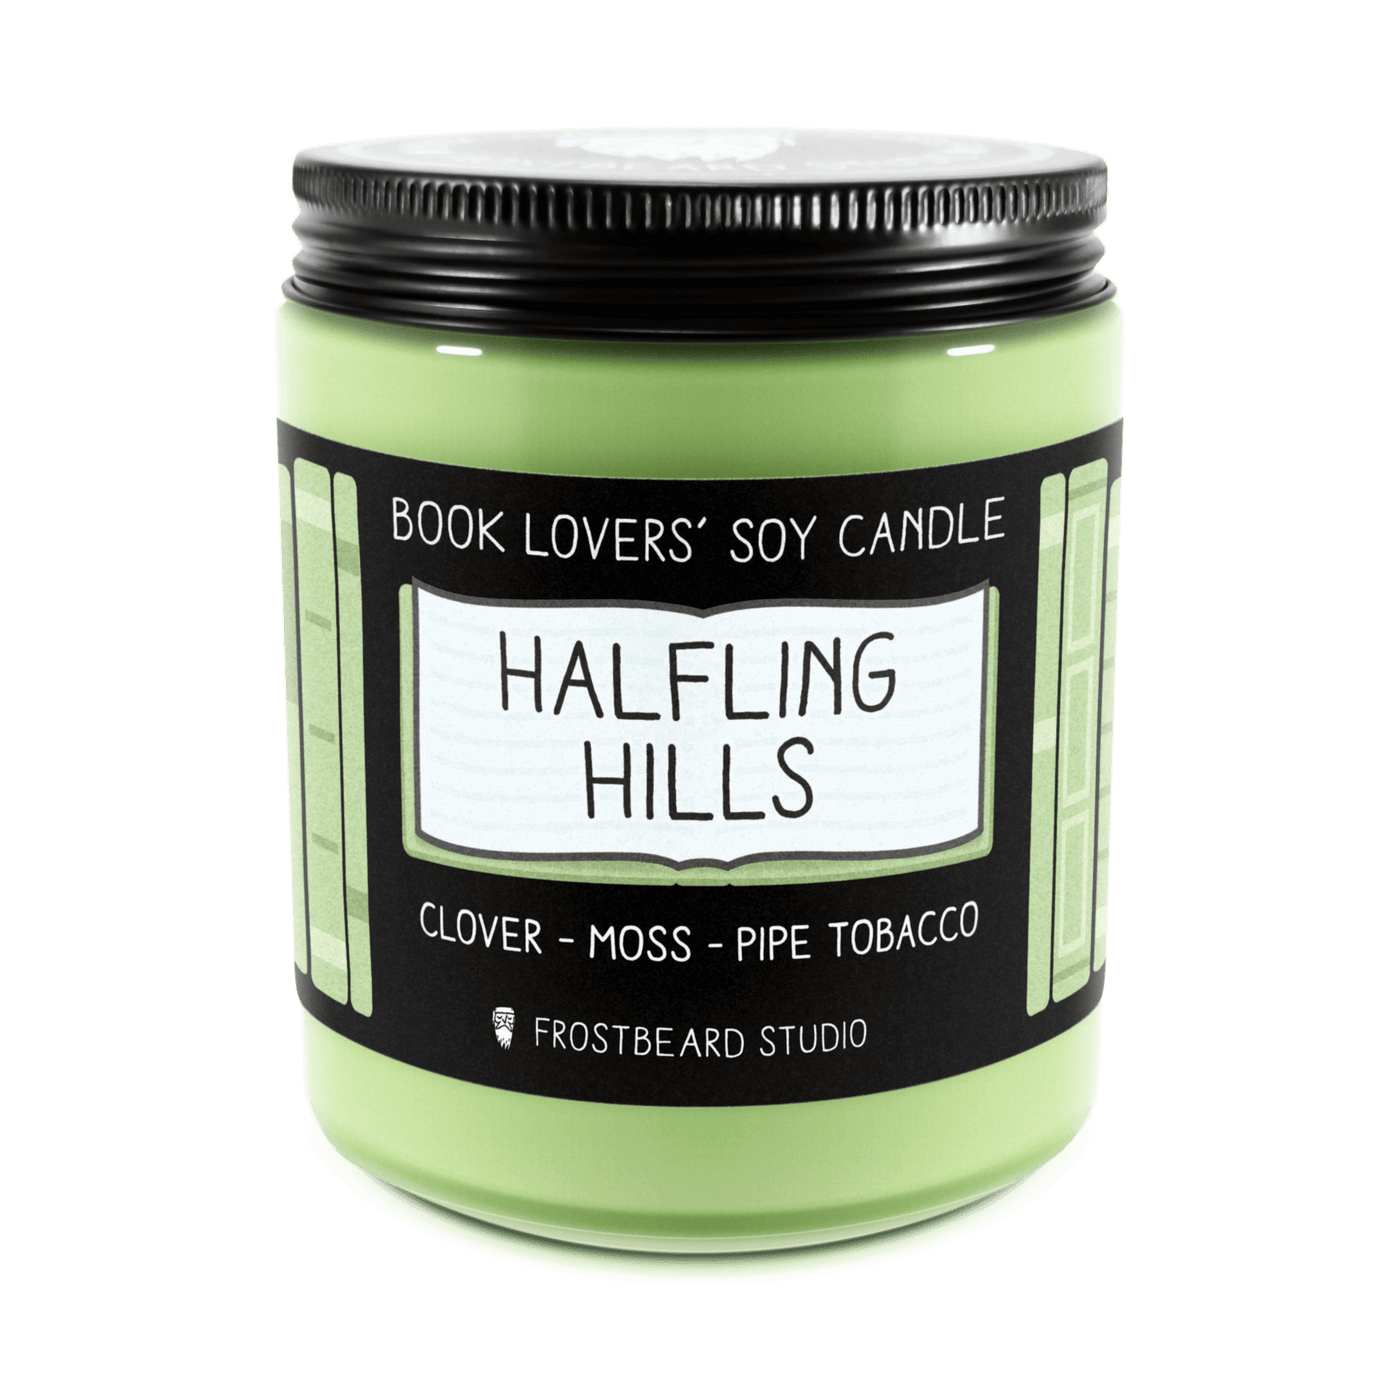 Halfling Hills  -  8 oz Jar  -  Book Lovers' Soy Candle  -  Frostbeard Studio